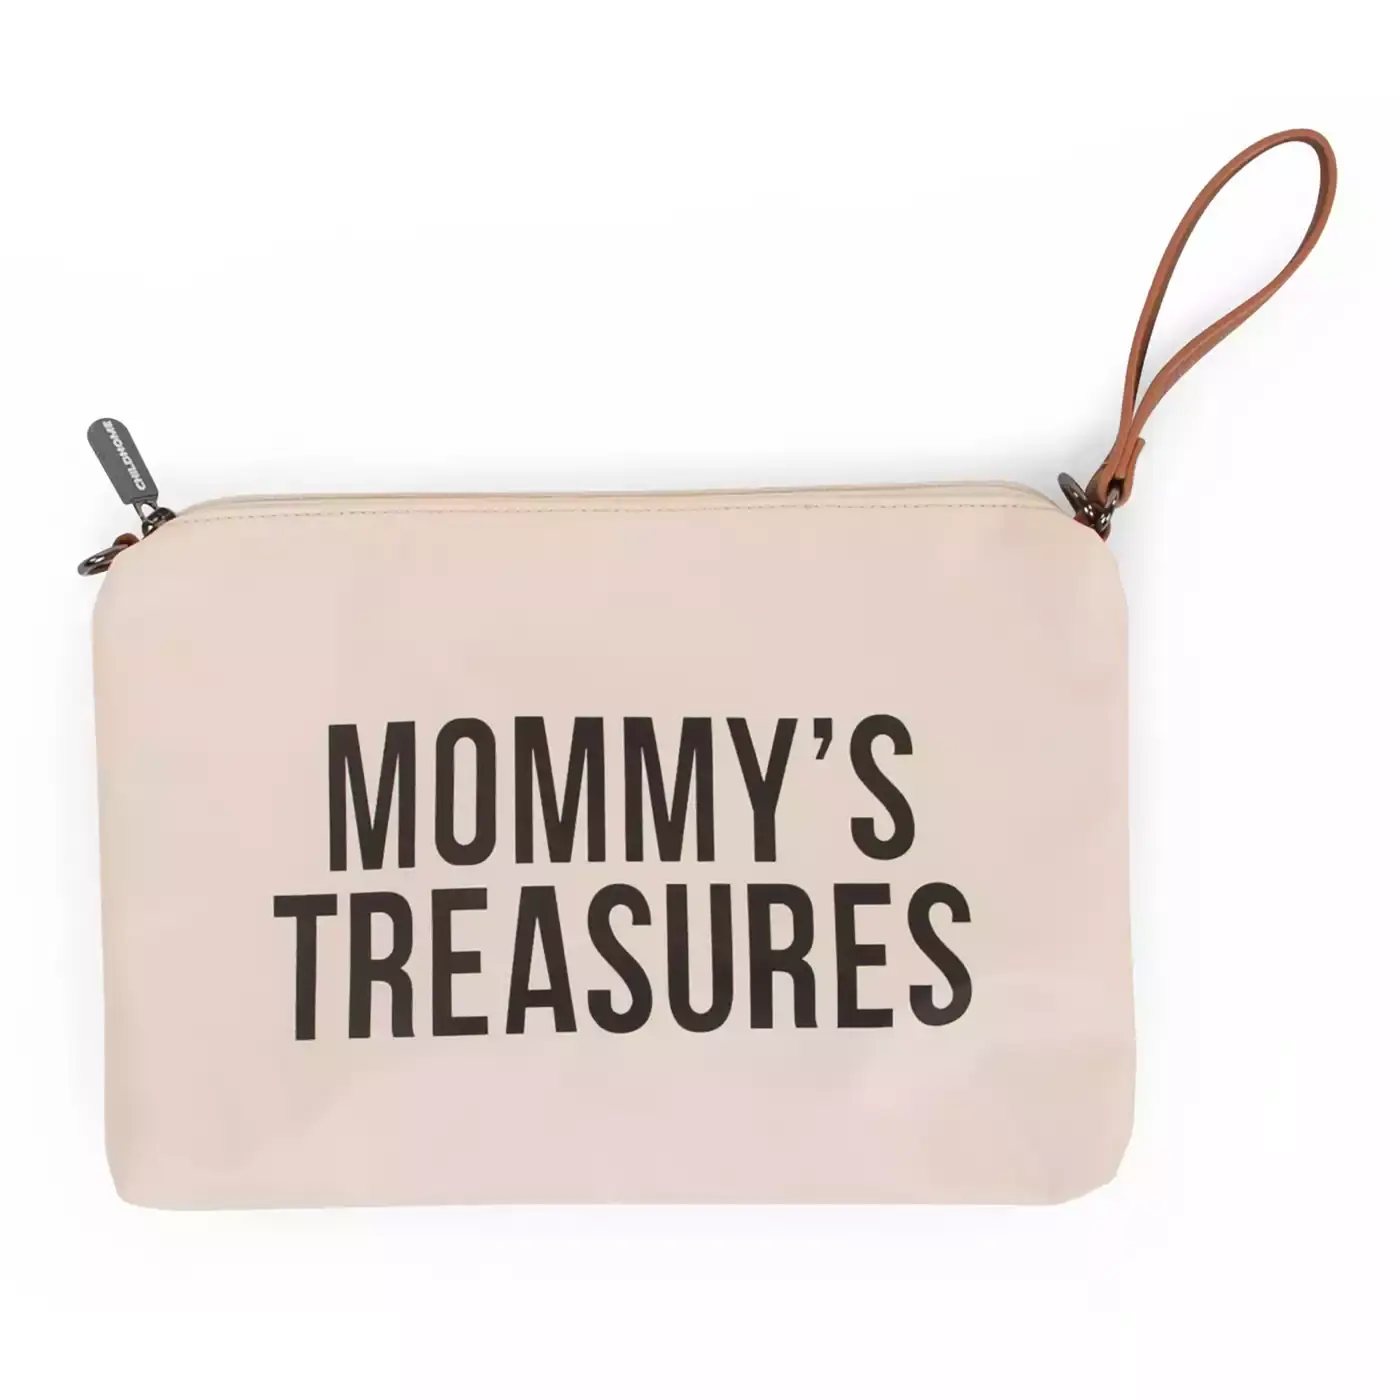 Mommy's Treasures Clutch CHILDHOME Schwarz 2000580656183 3